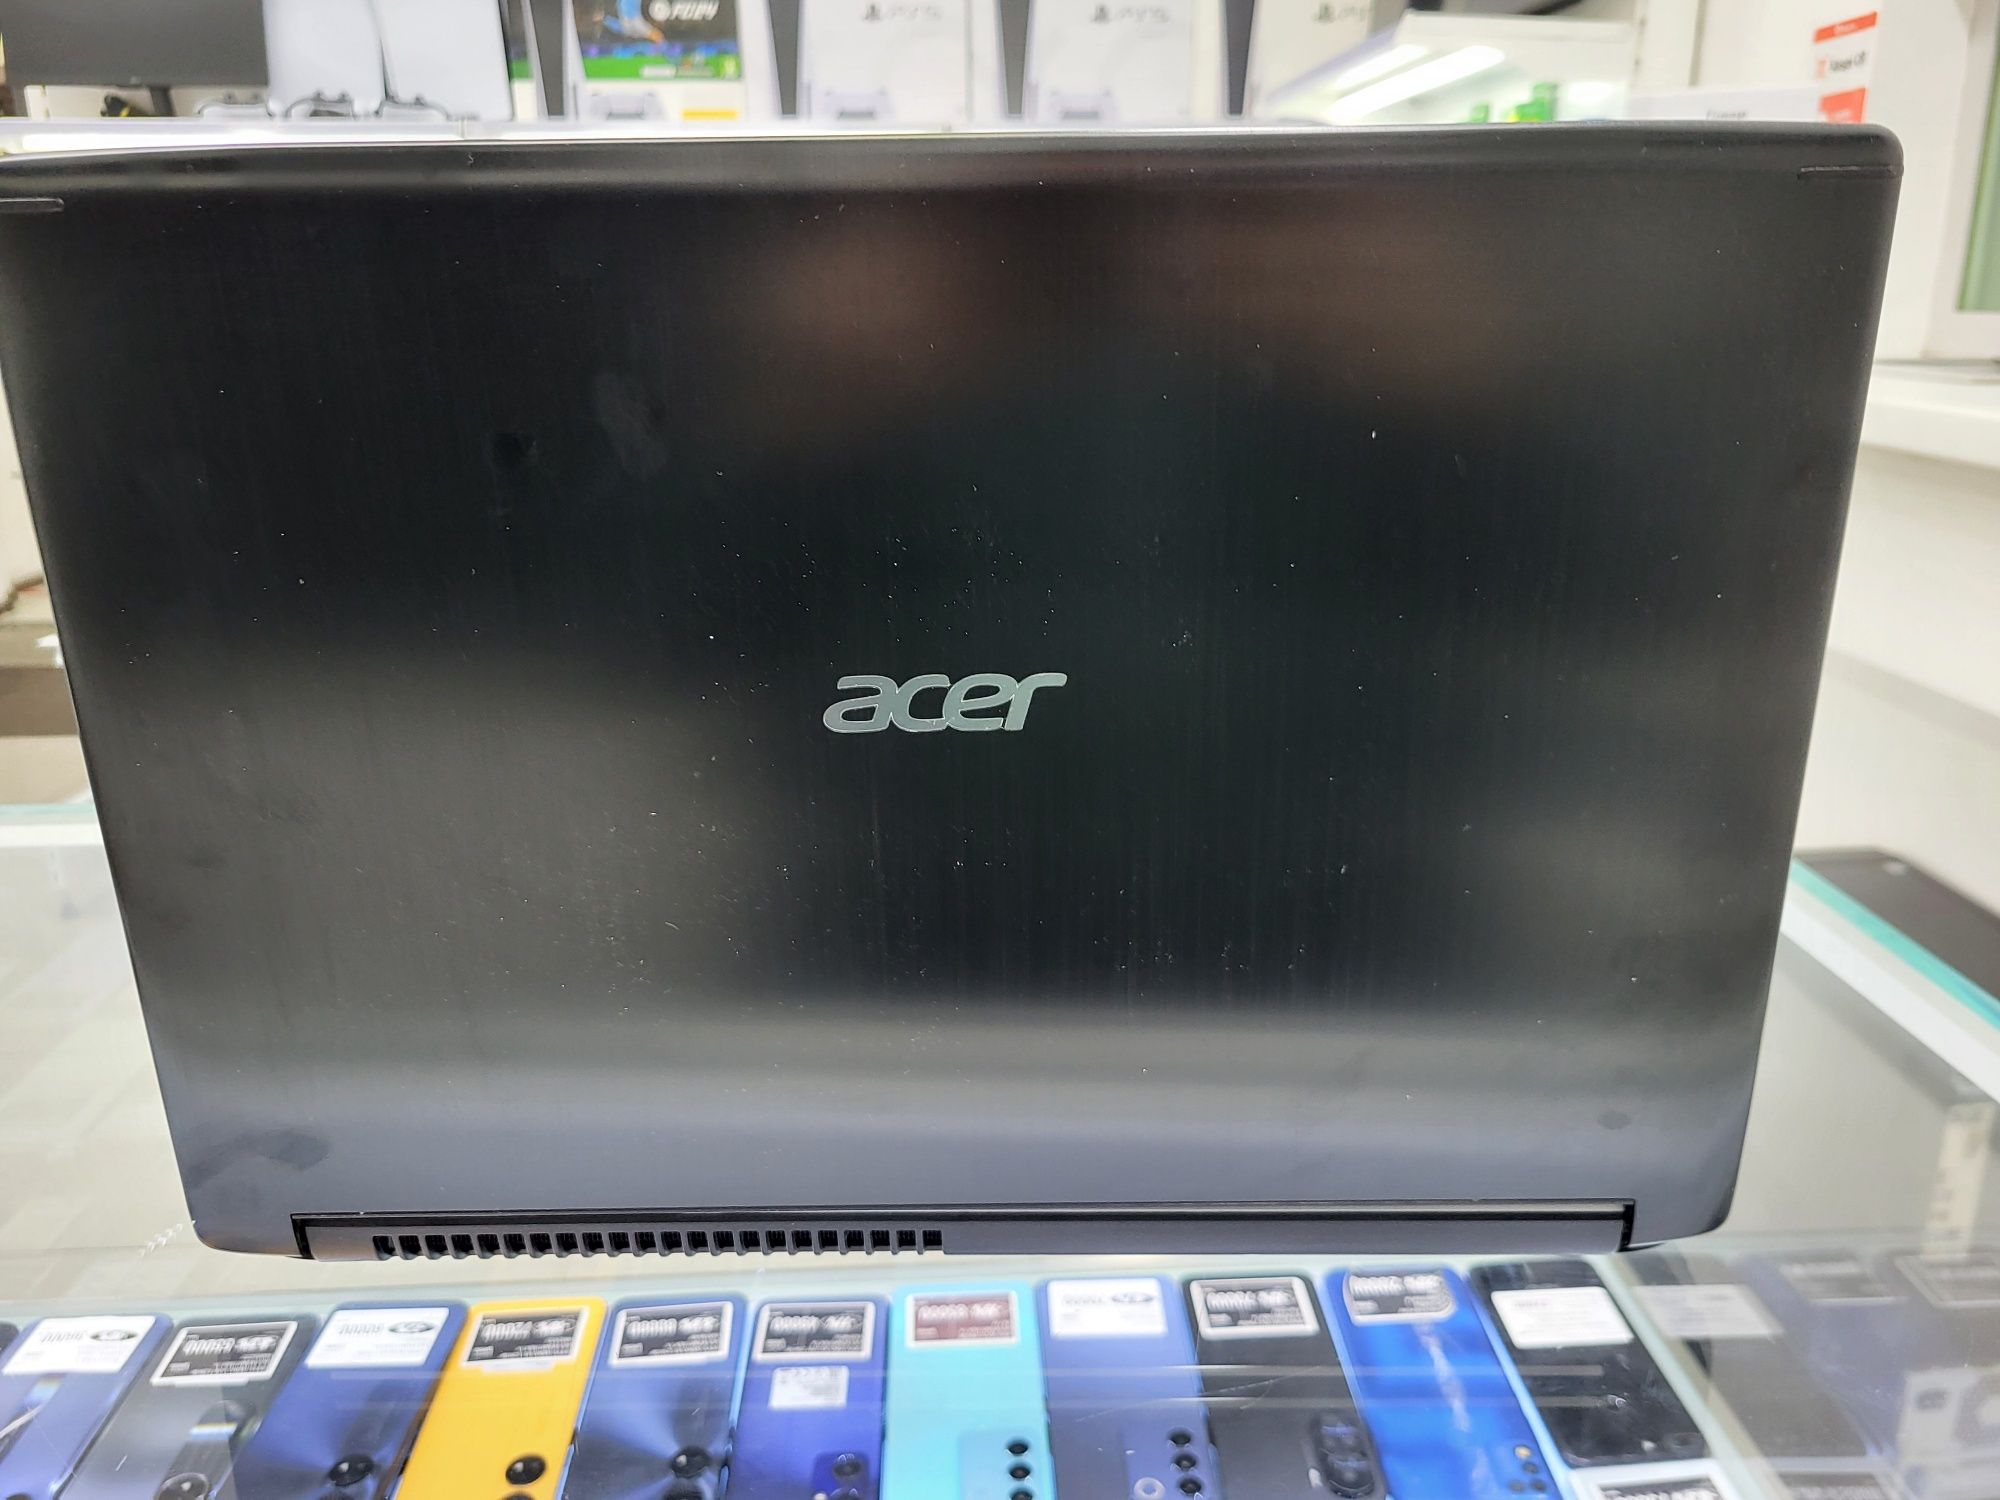 Ноутбук Acer core i7 7700Hq озу 16гб ssd256gb Gtx1050ti рассрочка